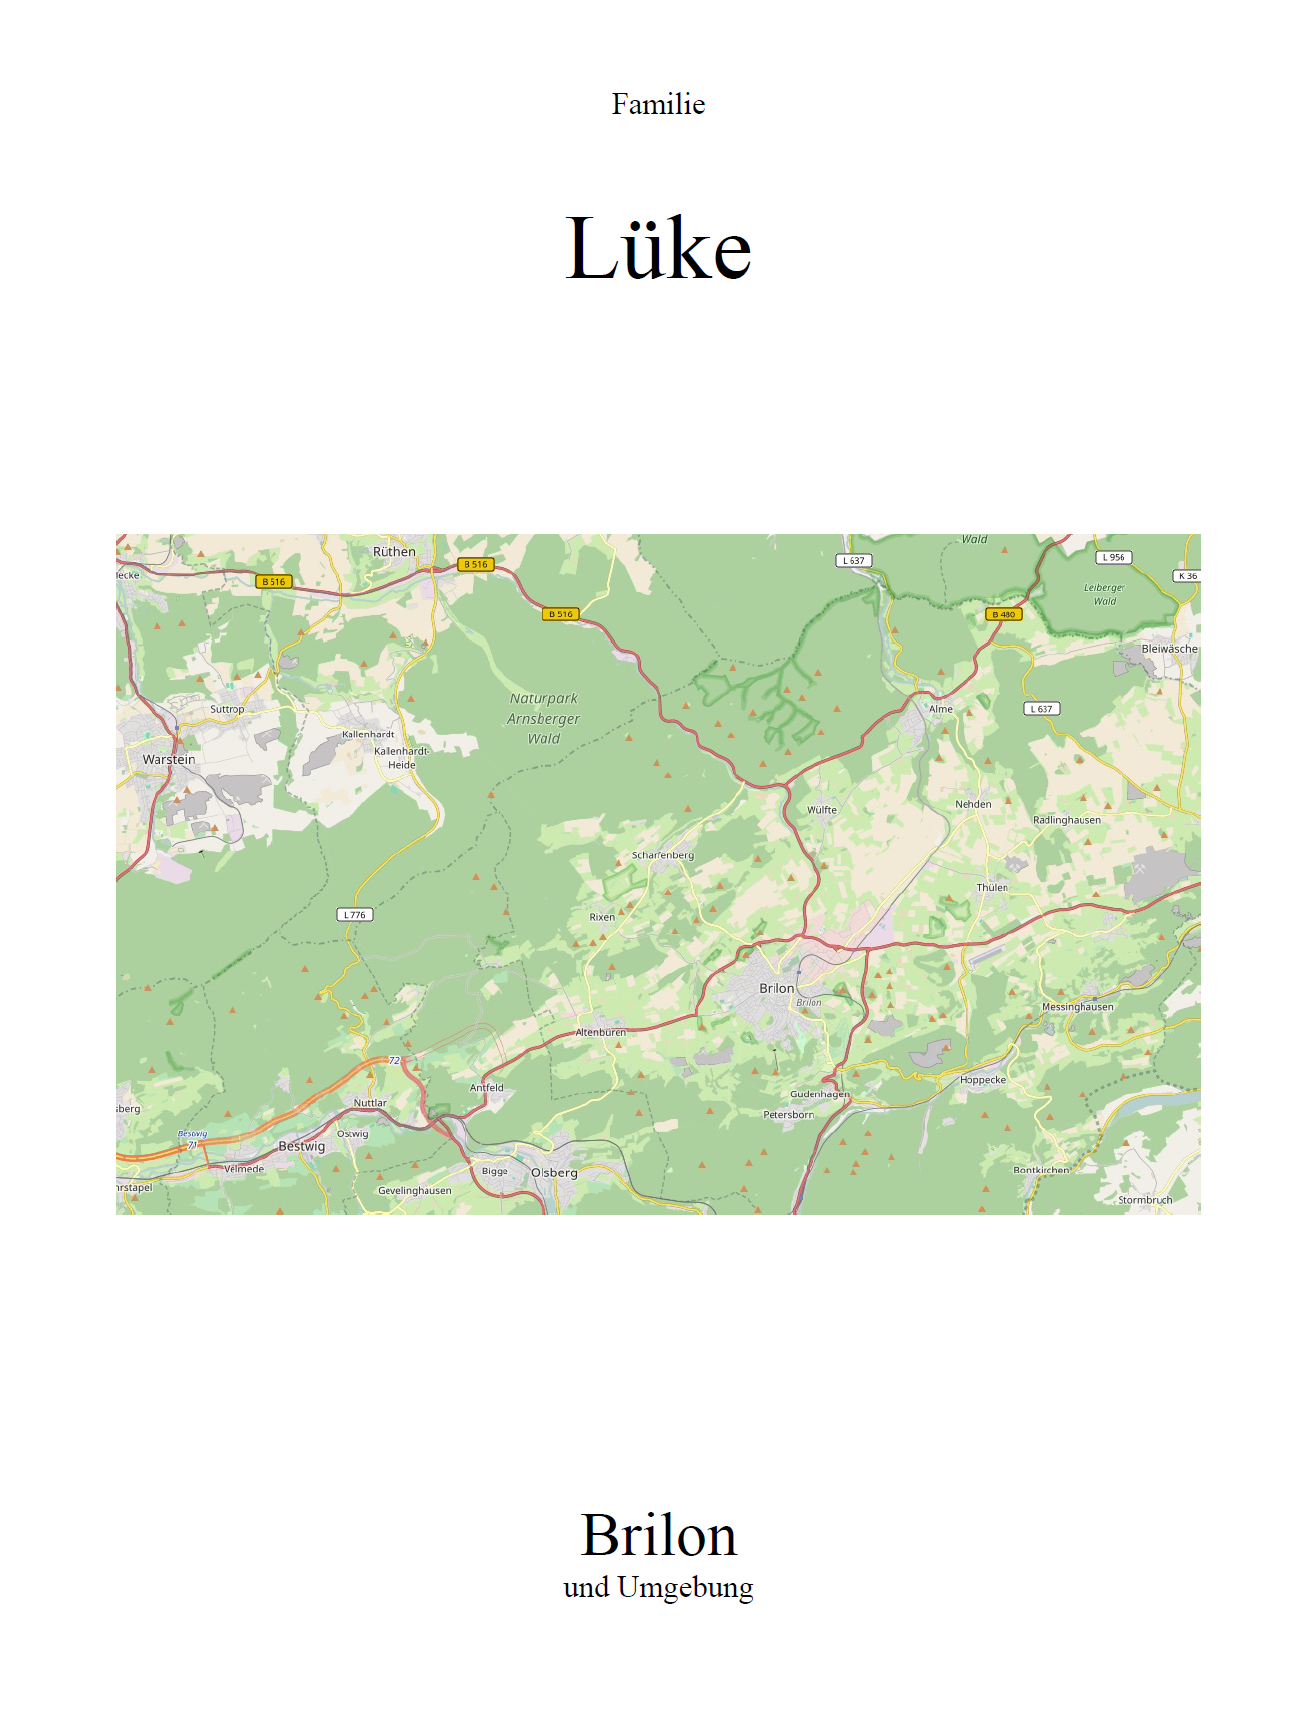 Henkel (2022), Familie Lüke aus Brilon, Bd. 7